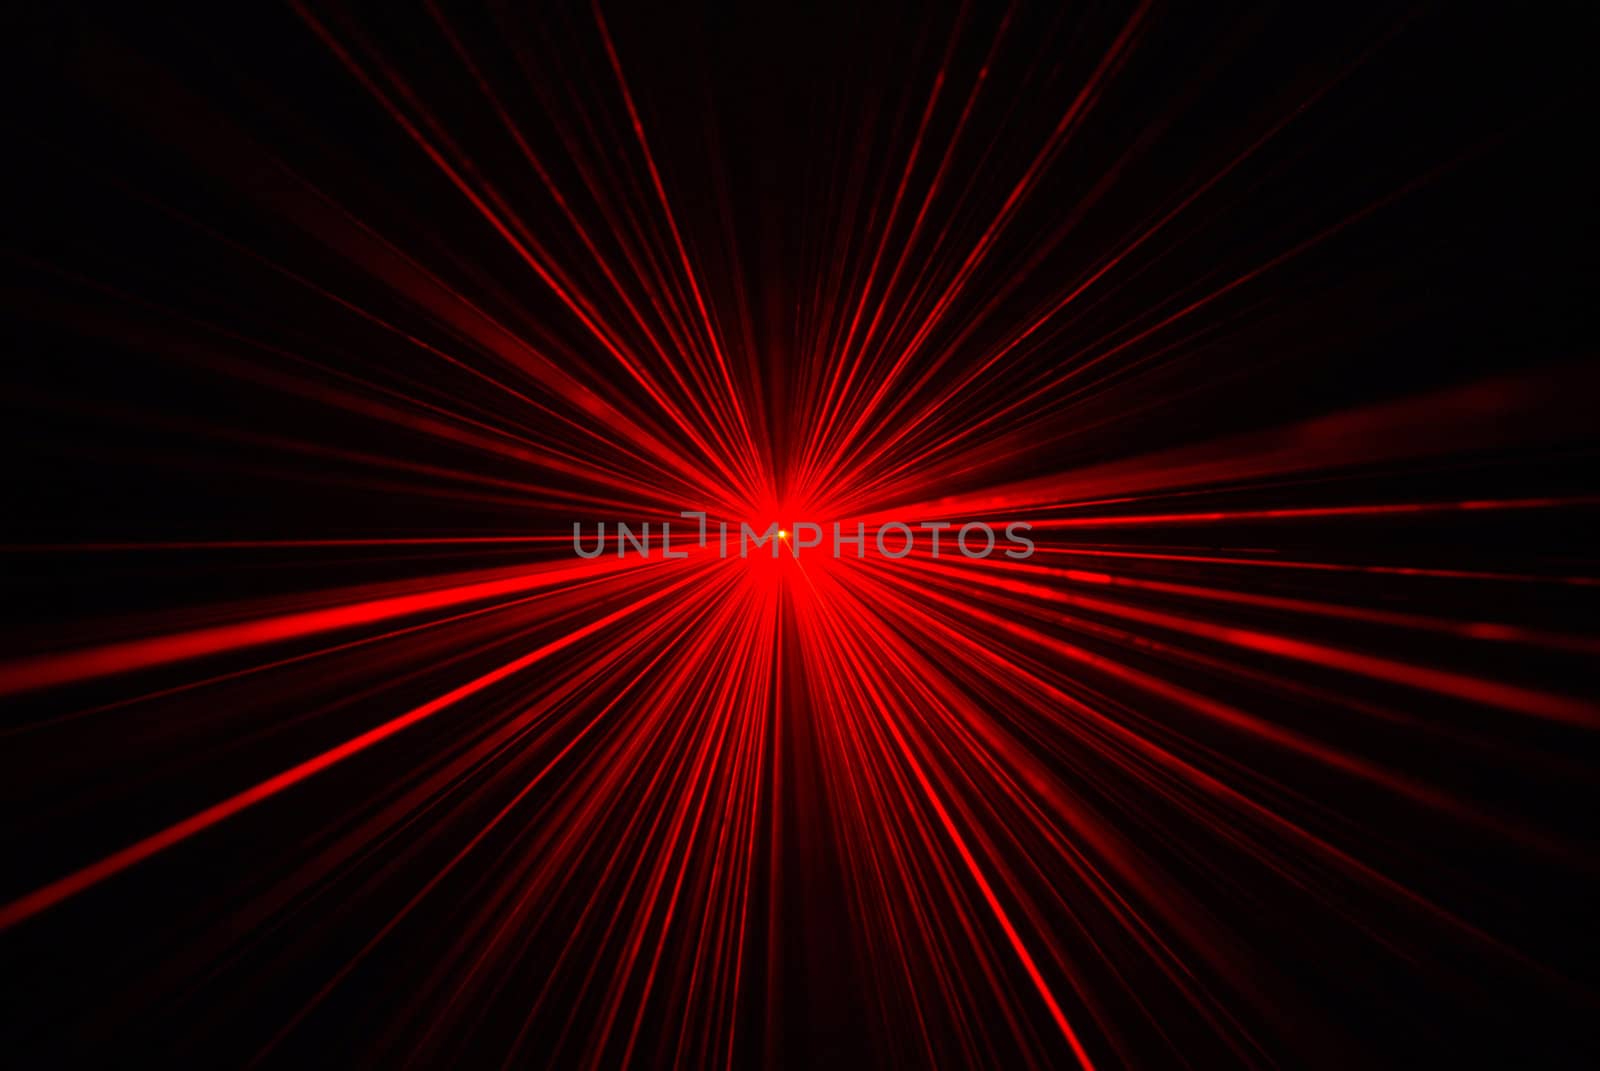 Flash a red laser